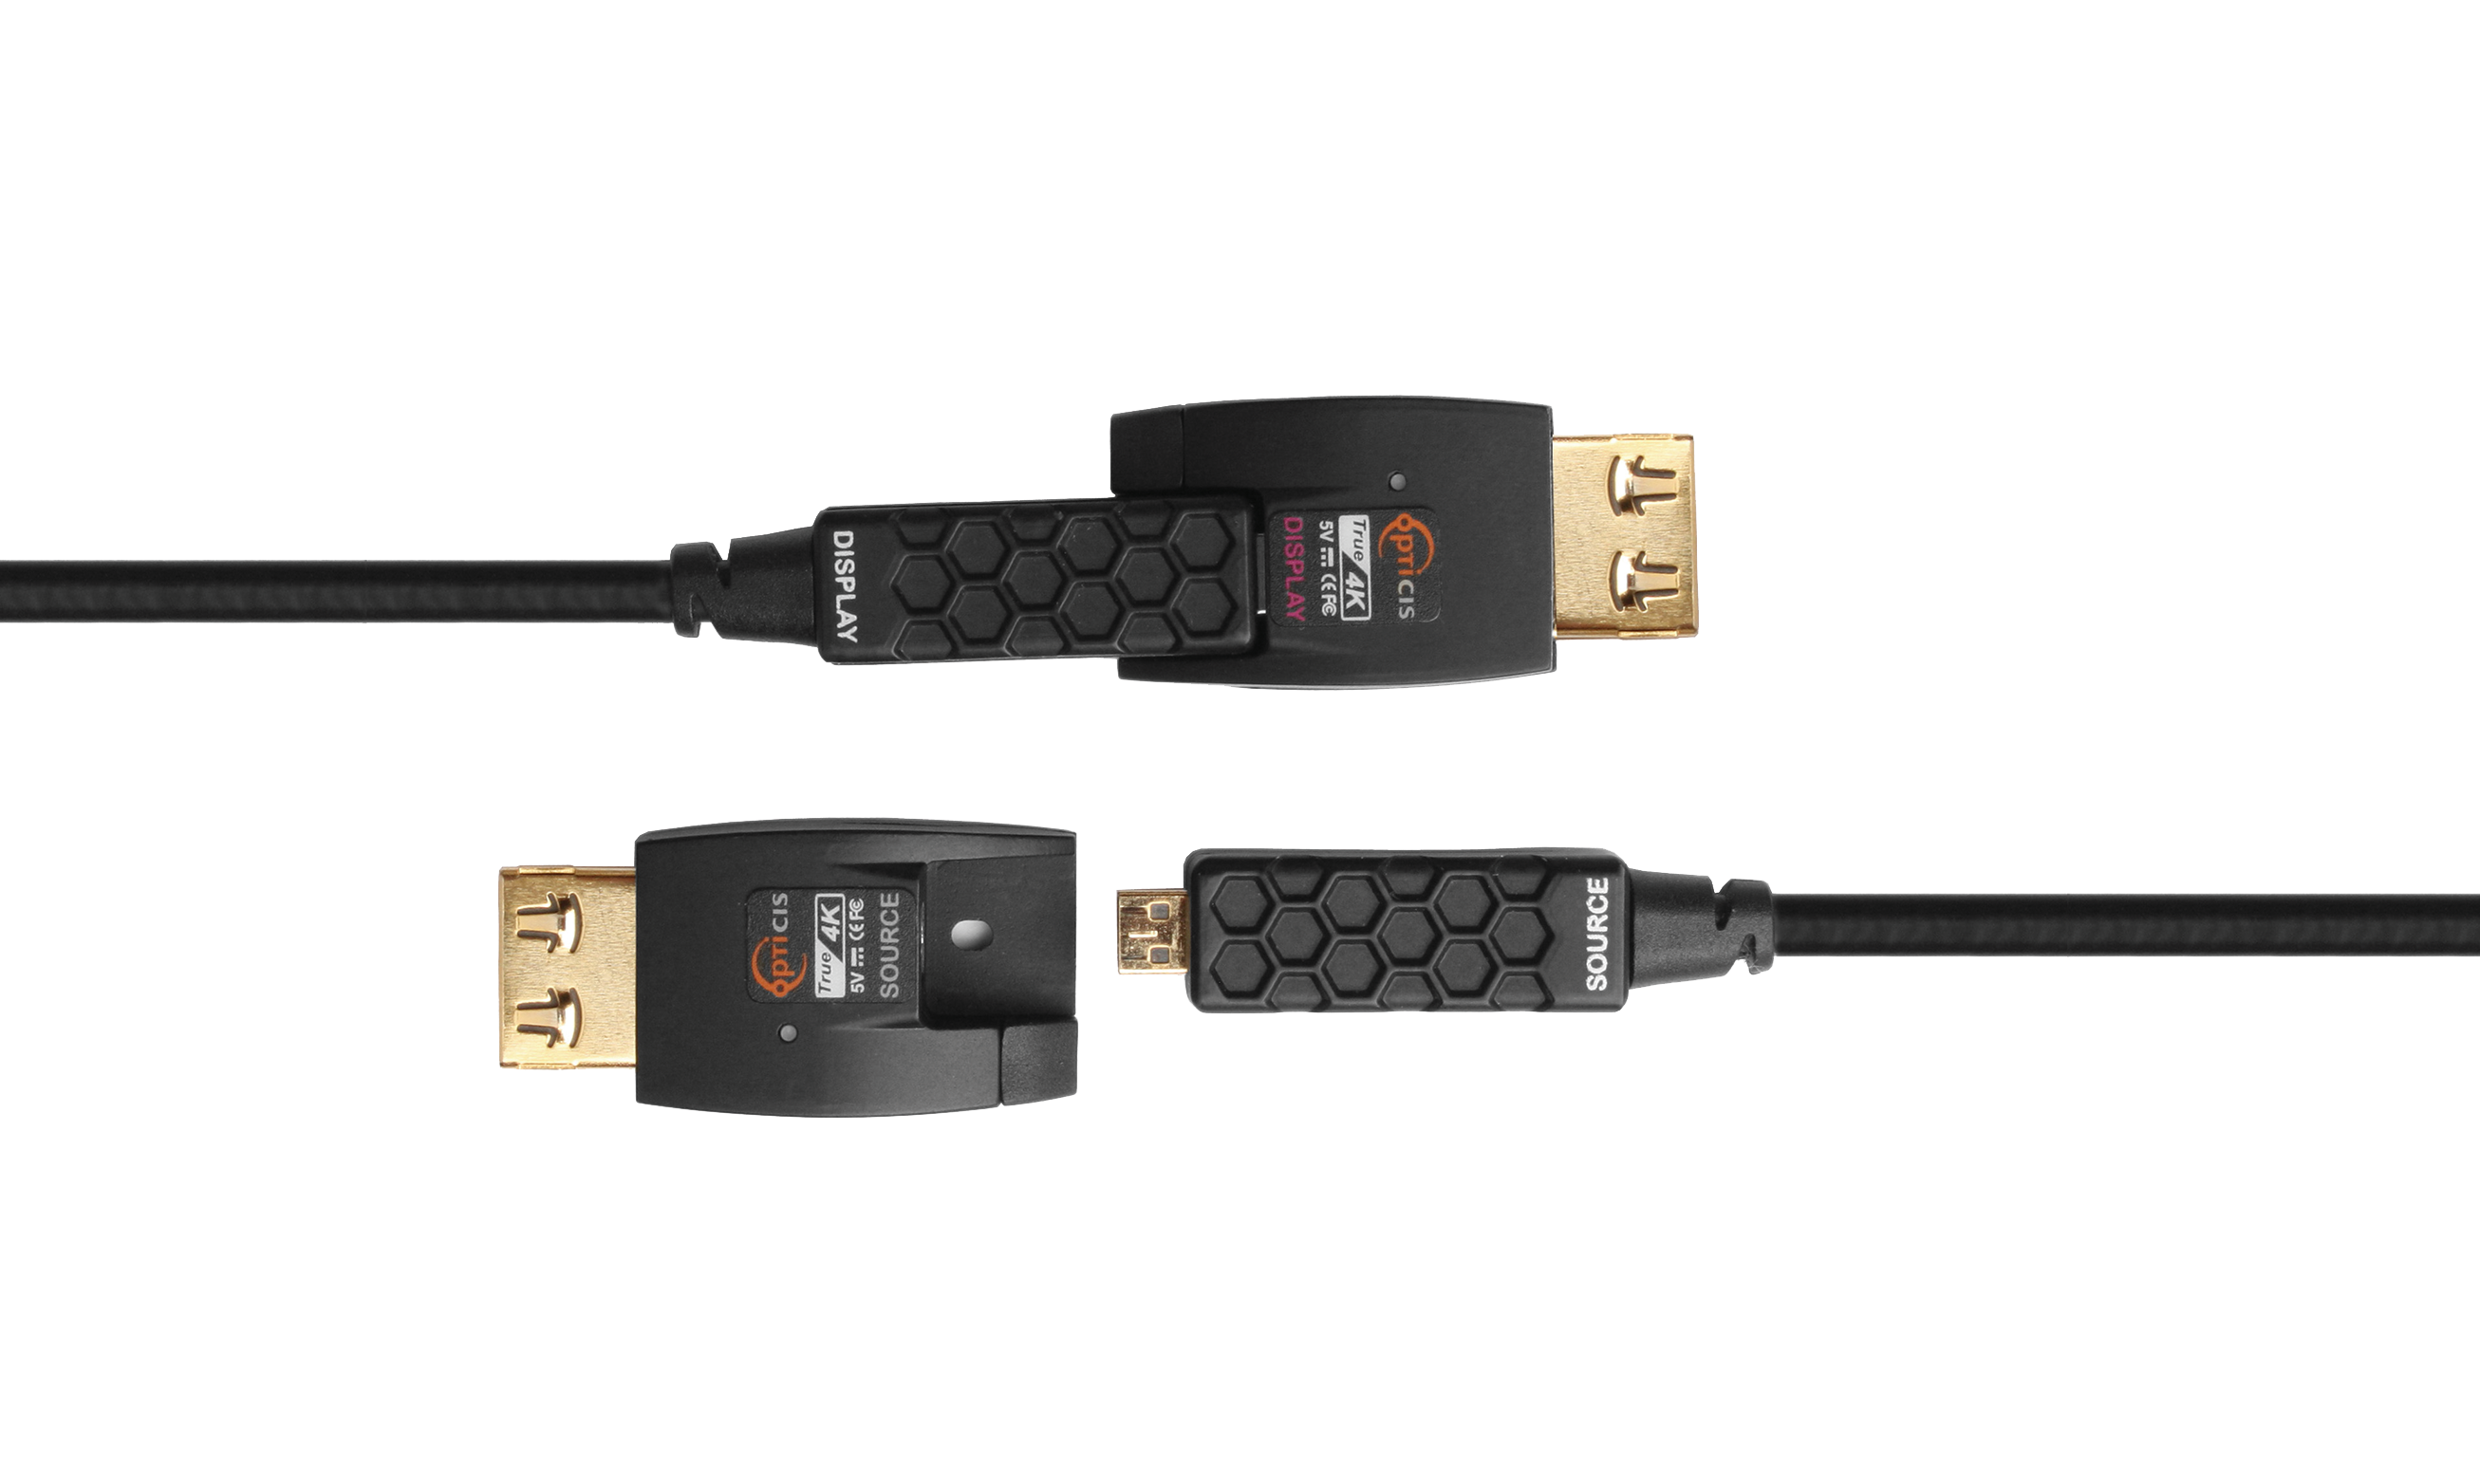 HDMI 2.0 Detachable Cable